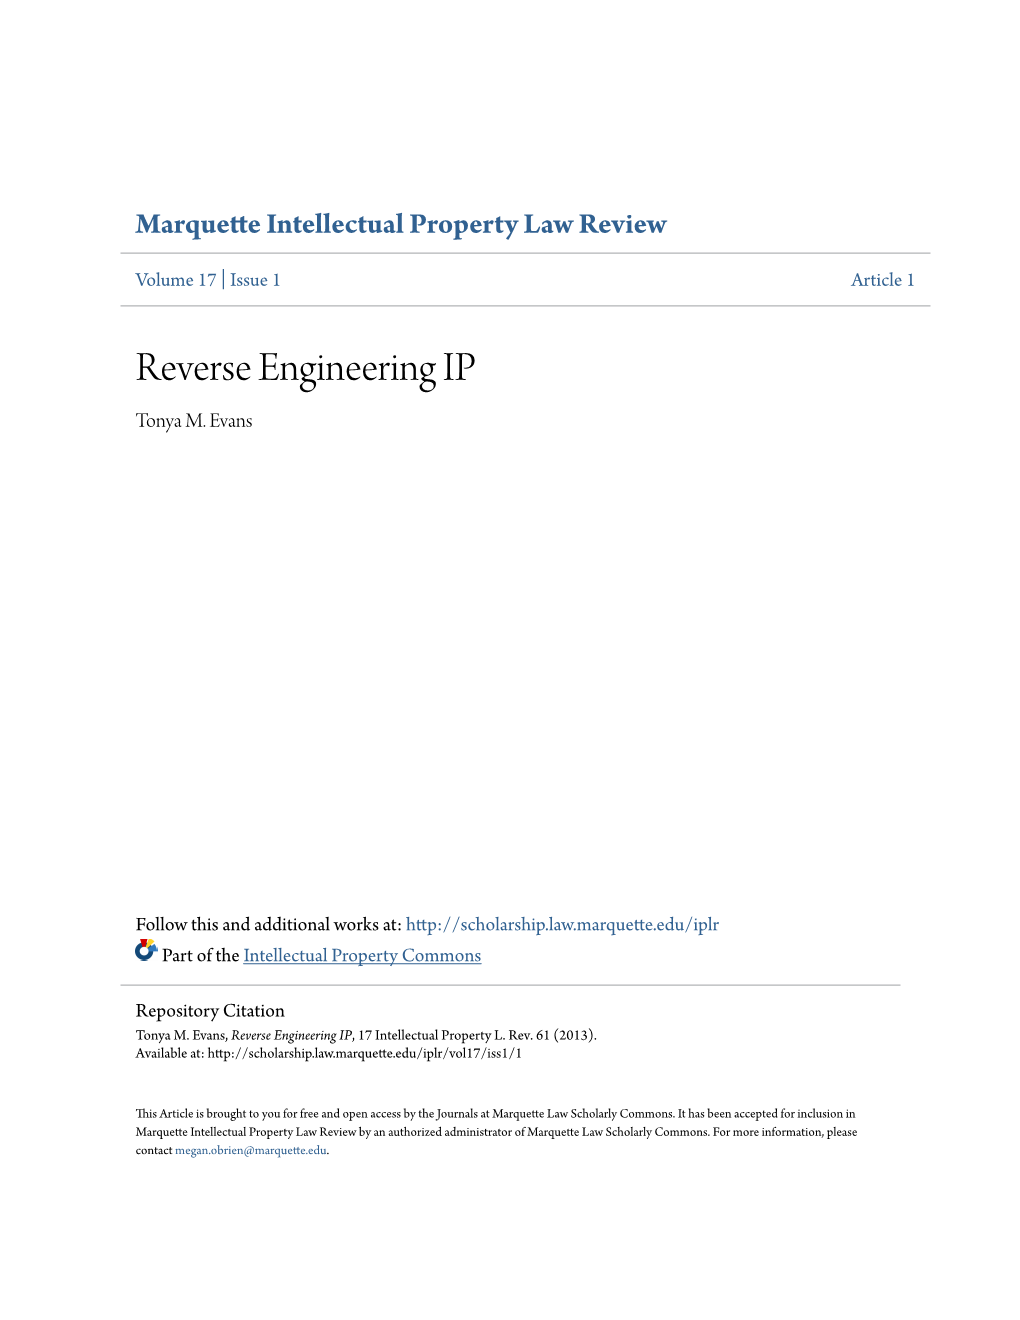 Reverse Engineering IP Tonya M